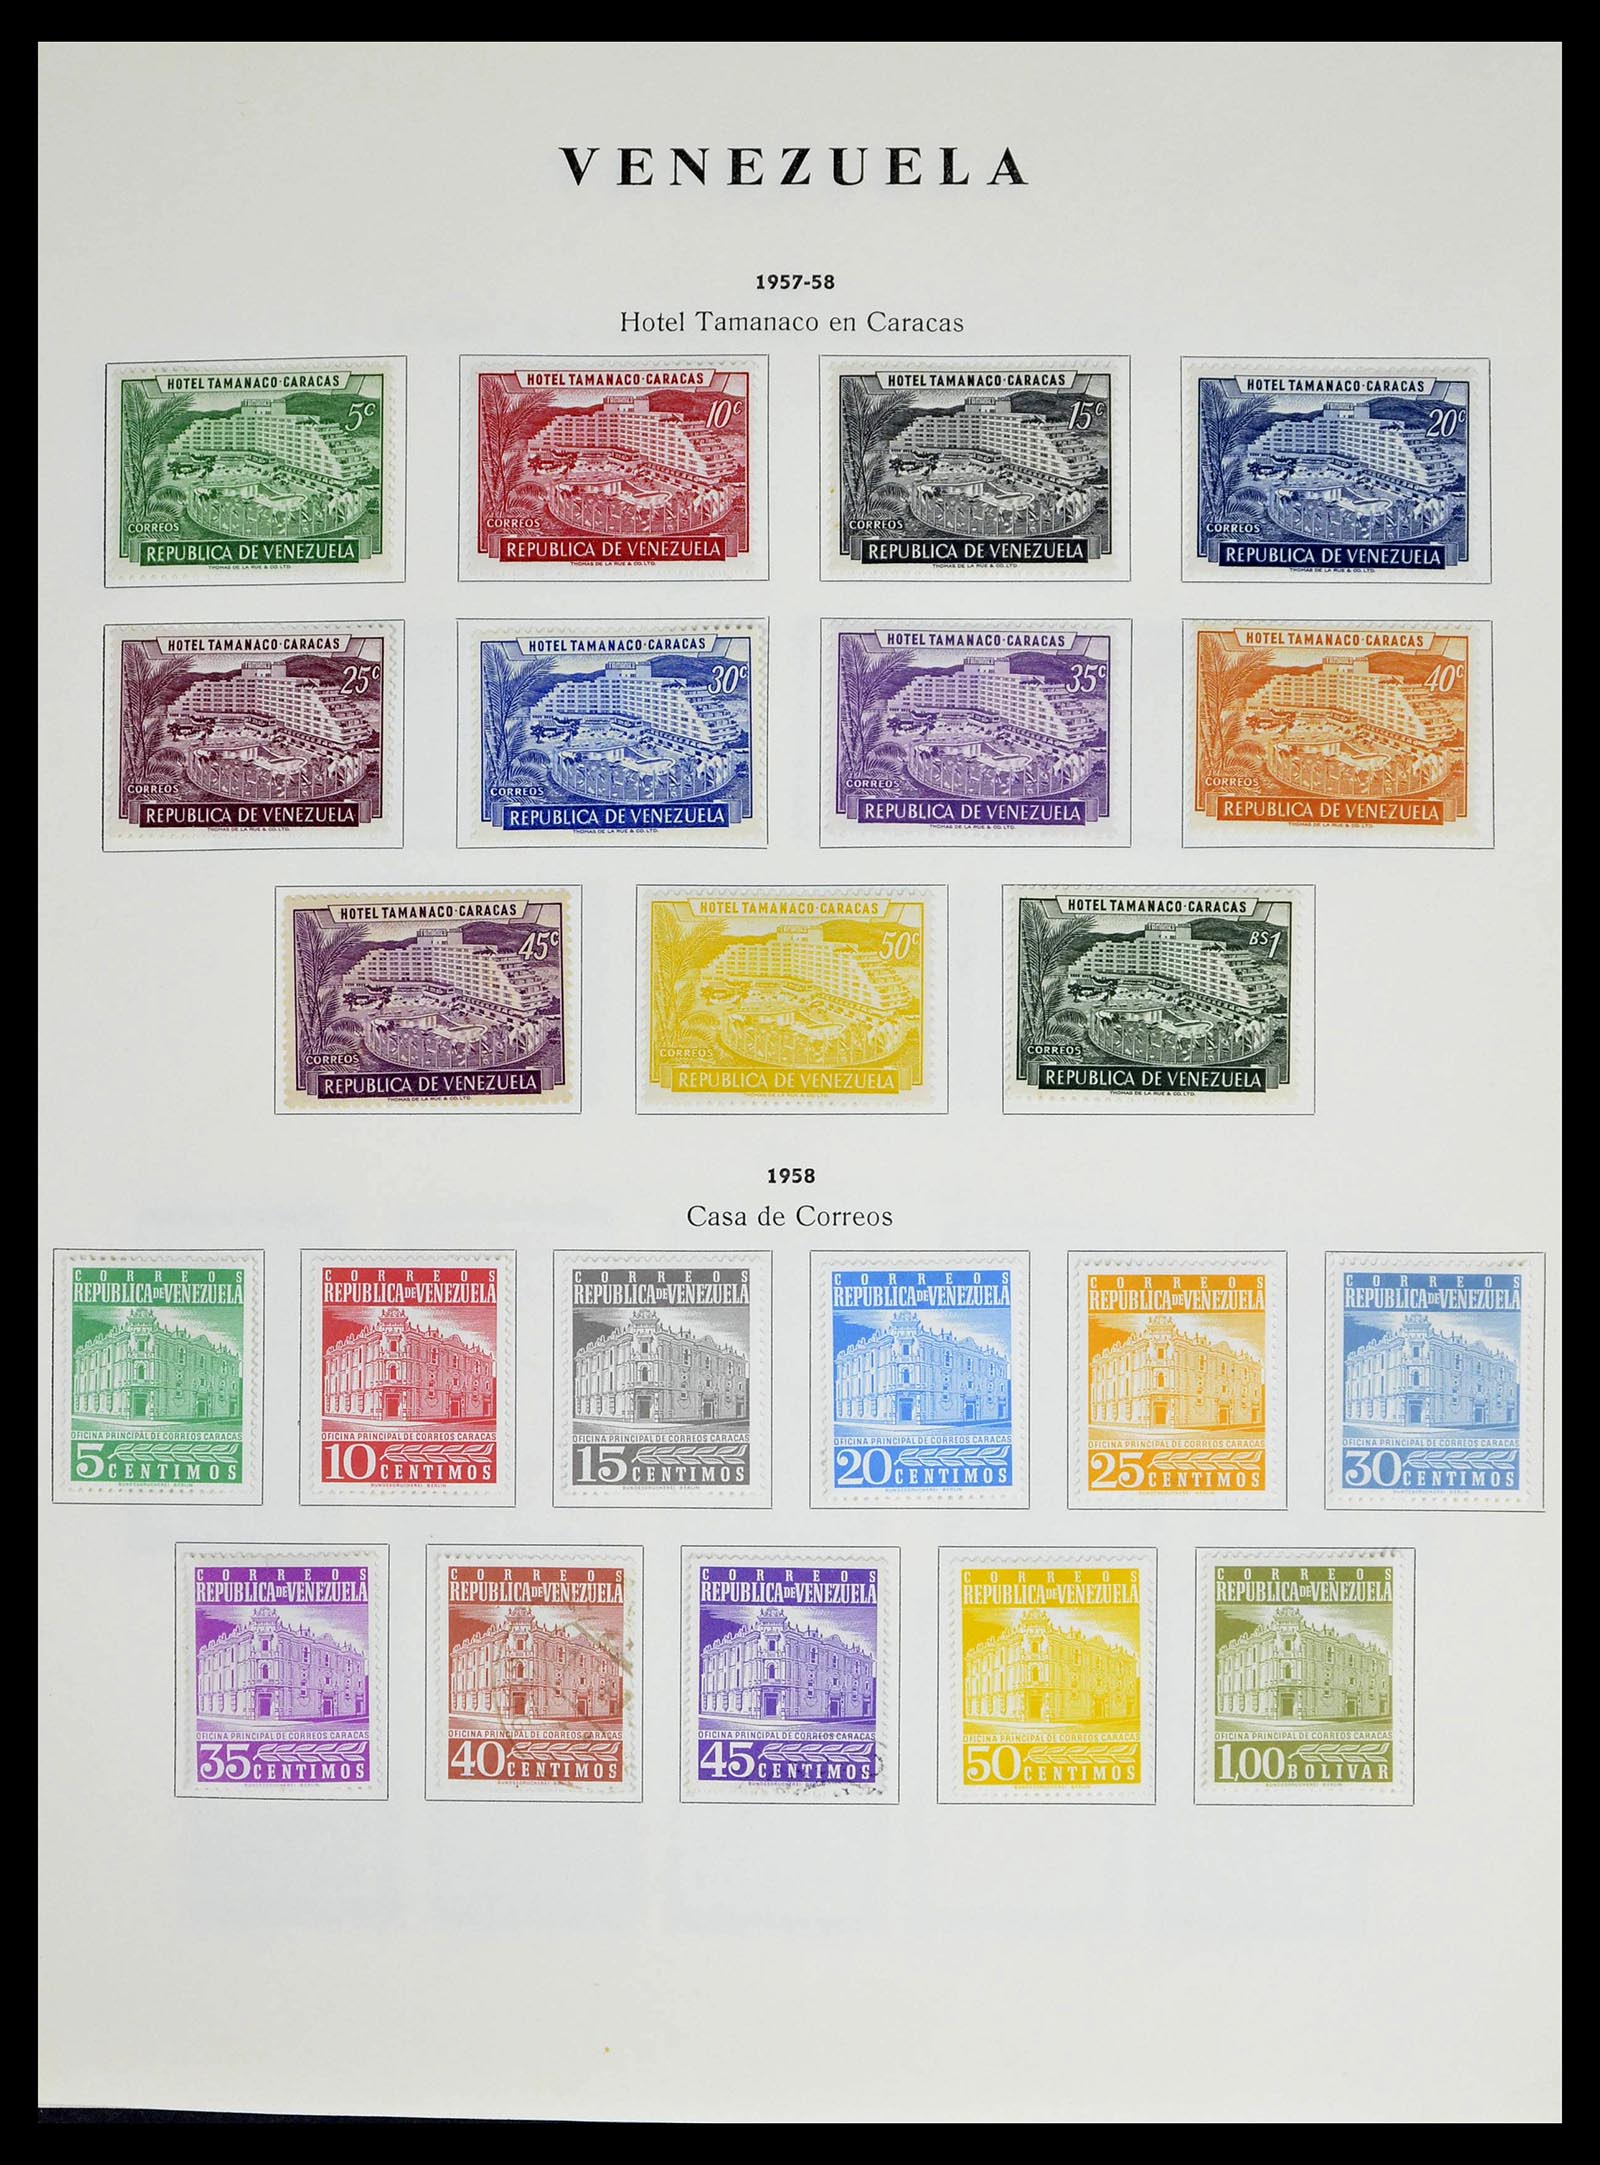 39223 0039 - Stamp collection 39223 Venezuela 1859-1984.